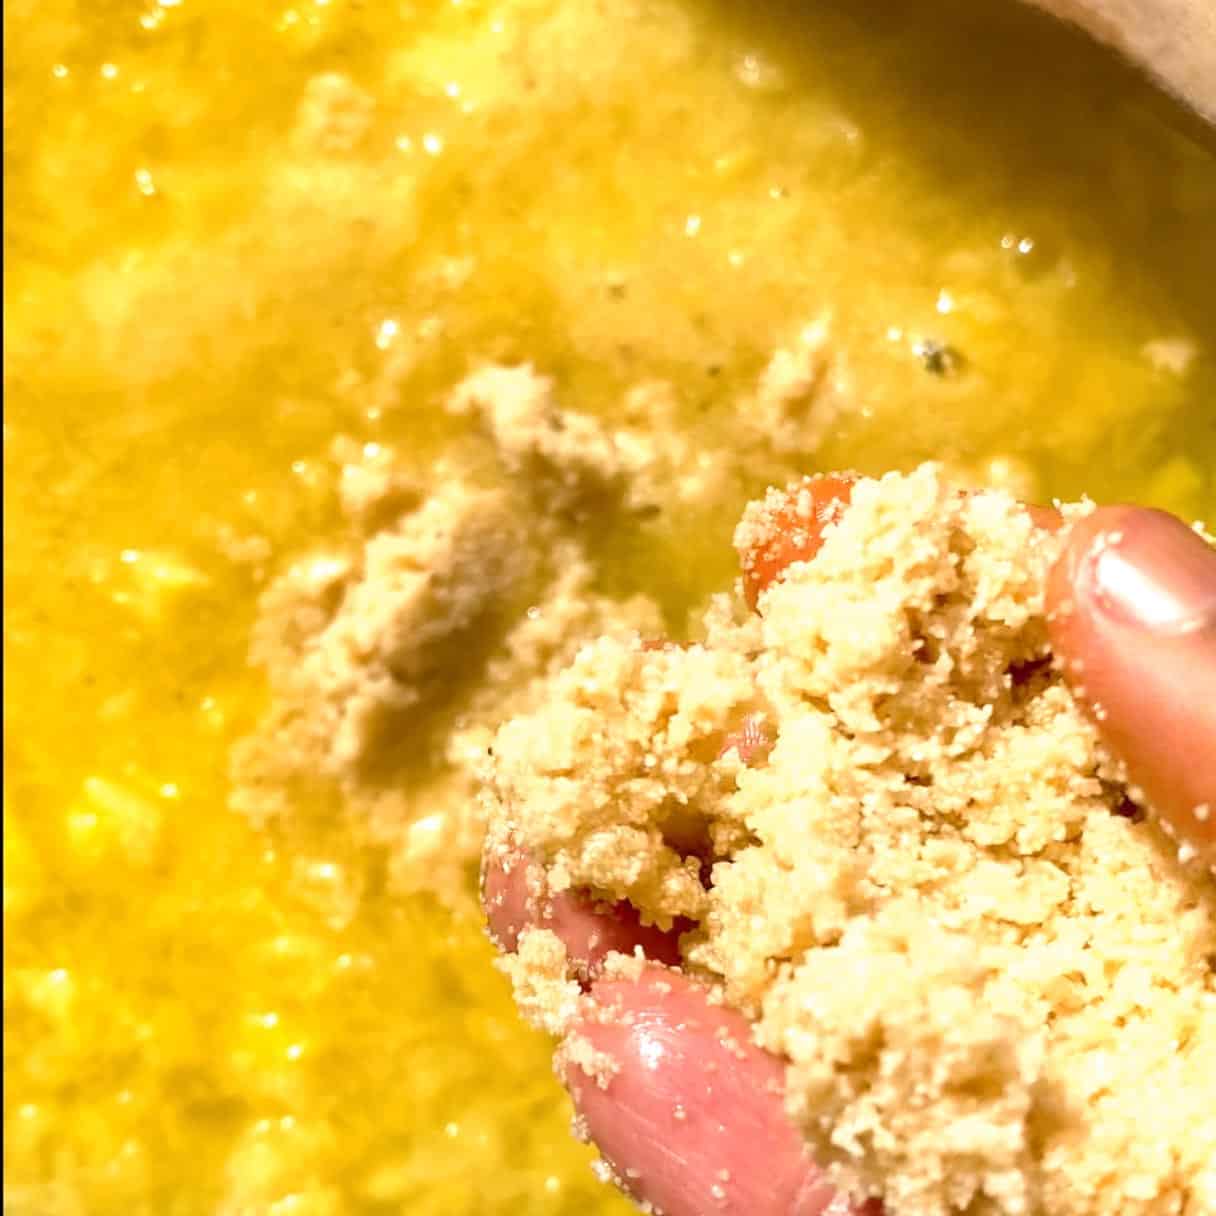 Hand adding roasted semolina into a pineapple sugar broth